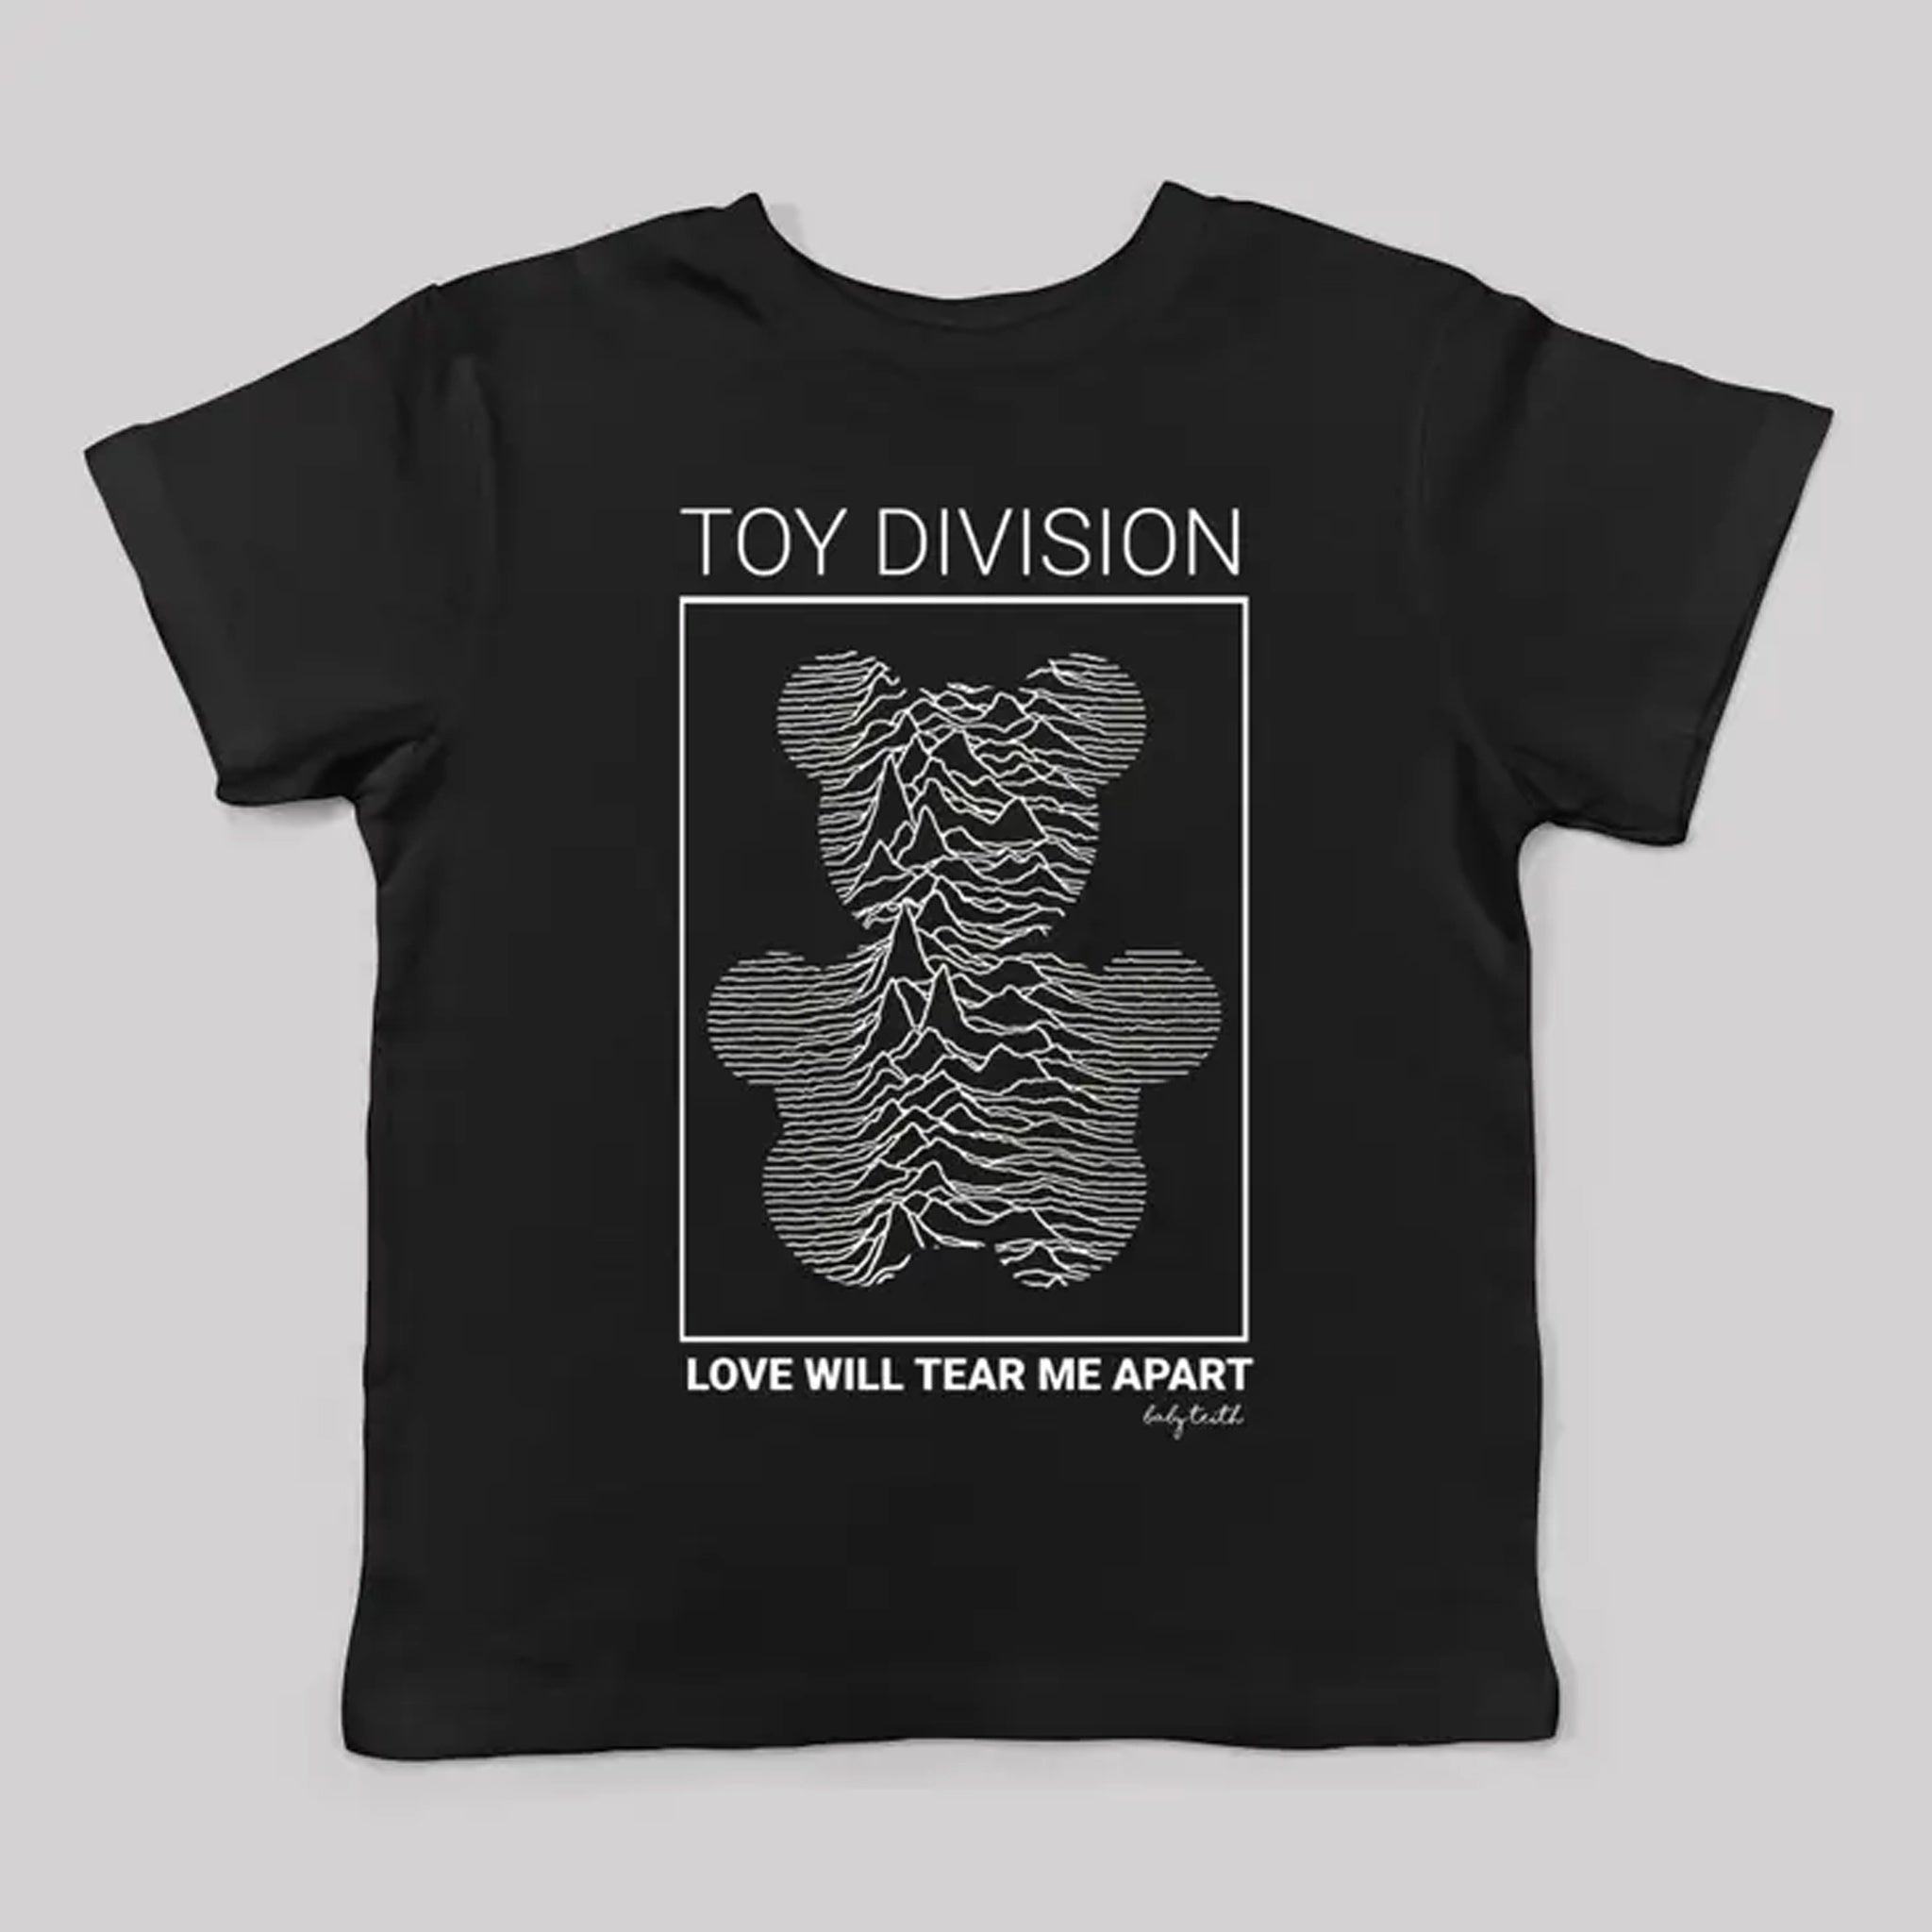 Toy Division tshirt